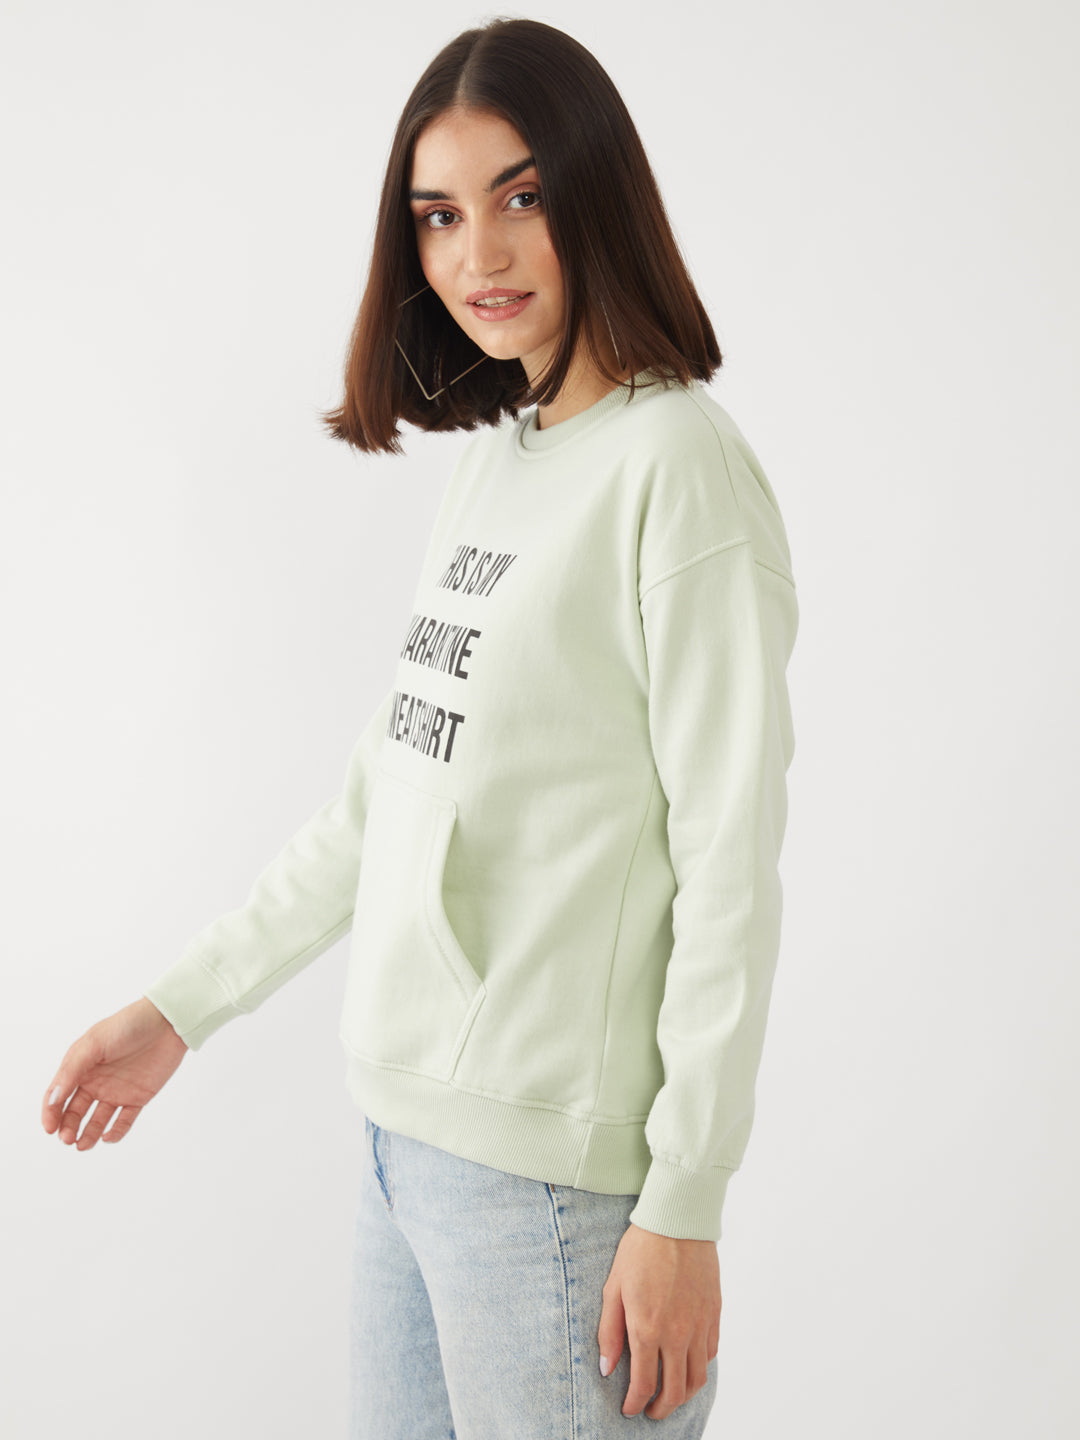 Green Printed Sweatshirt For Women